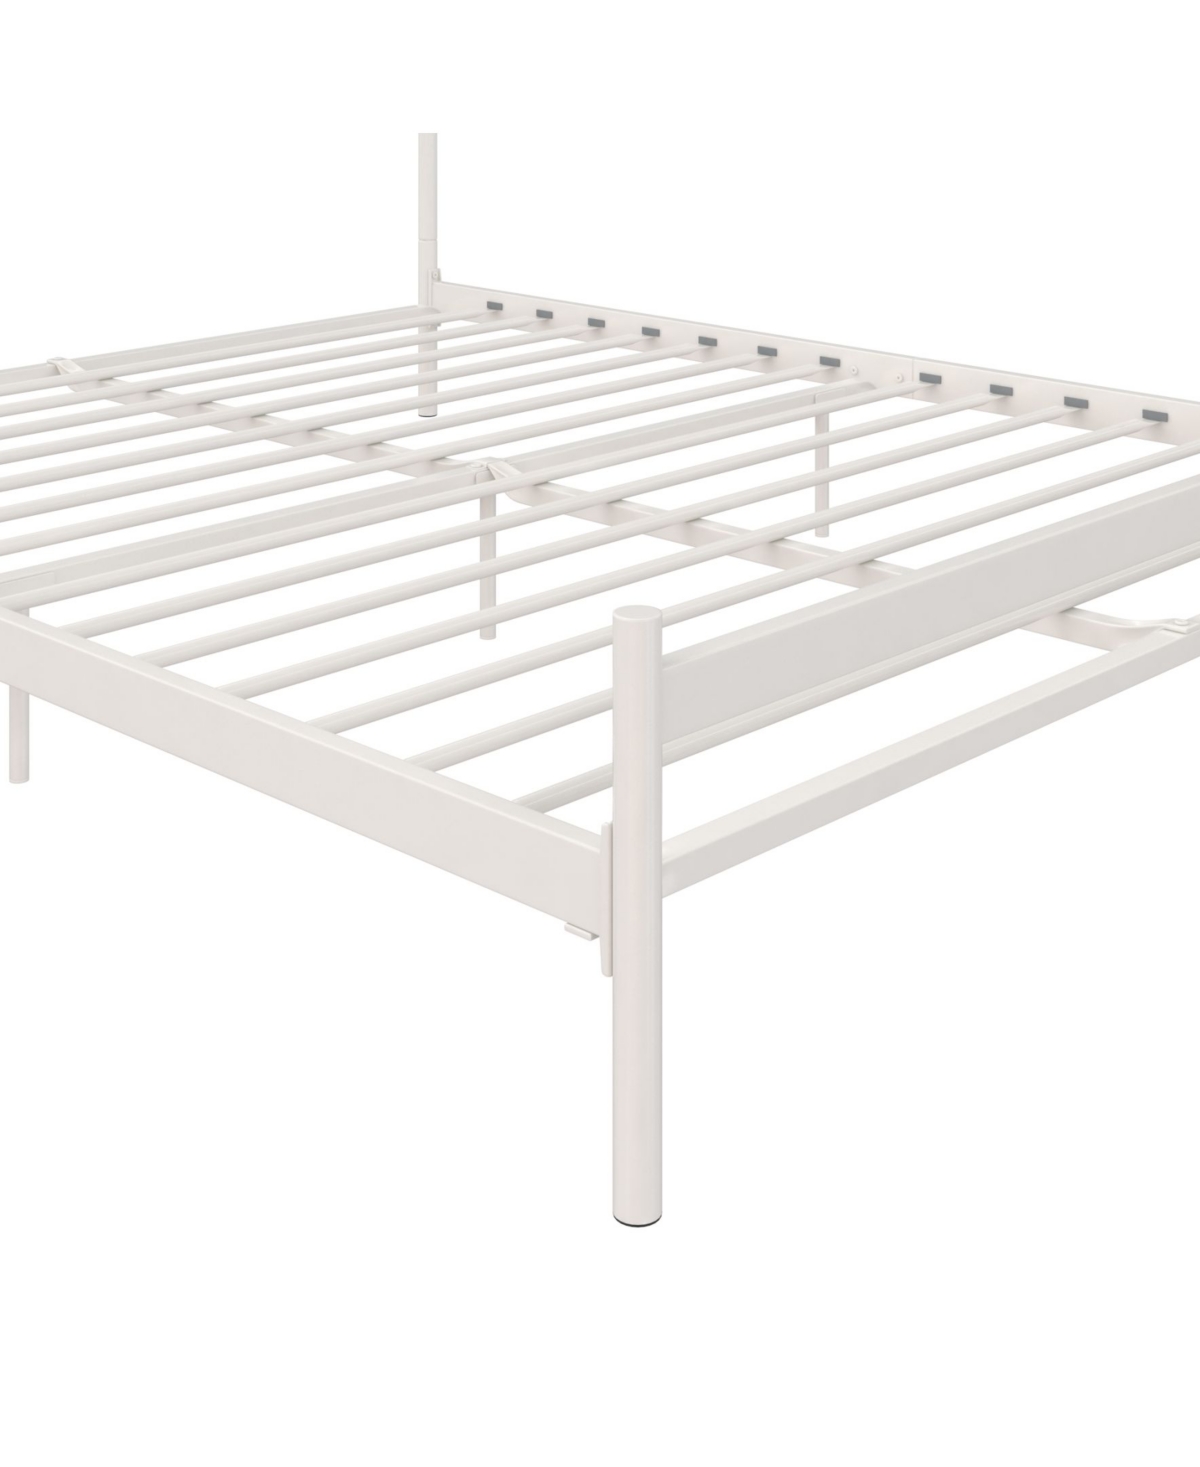 Everyroom Arya Metal Bed Full Size, Macys Furniture Metal Bed Frame